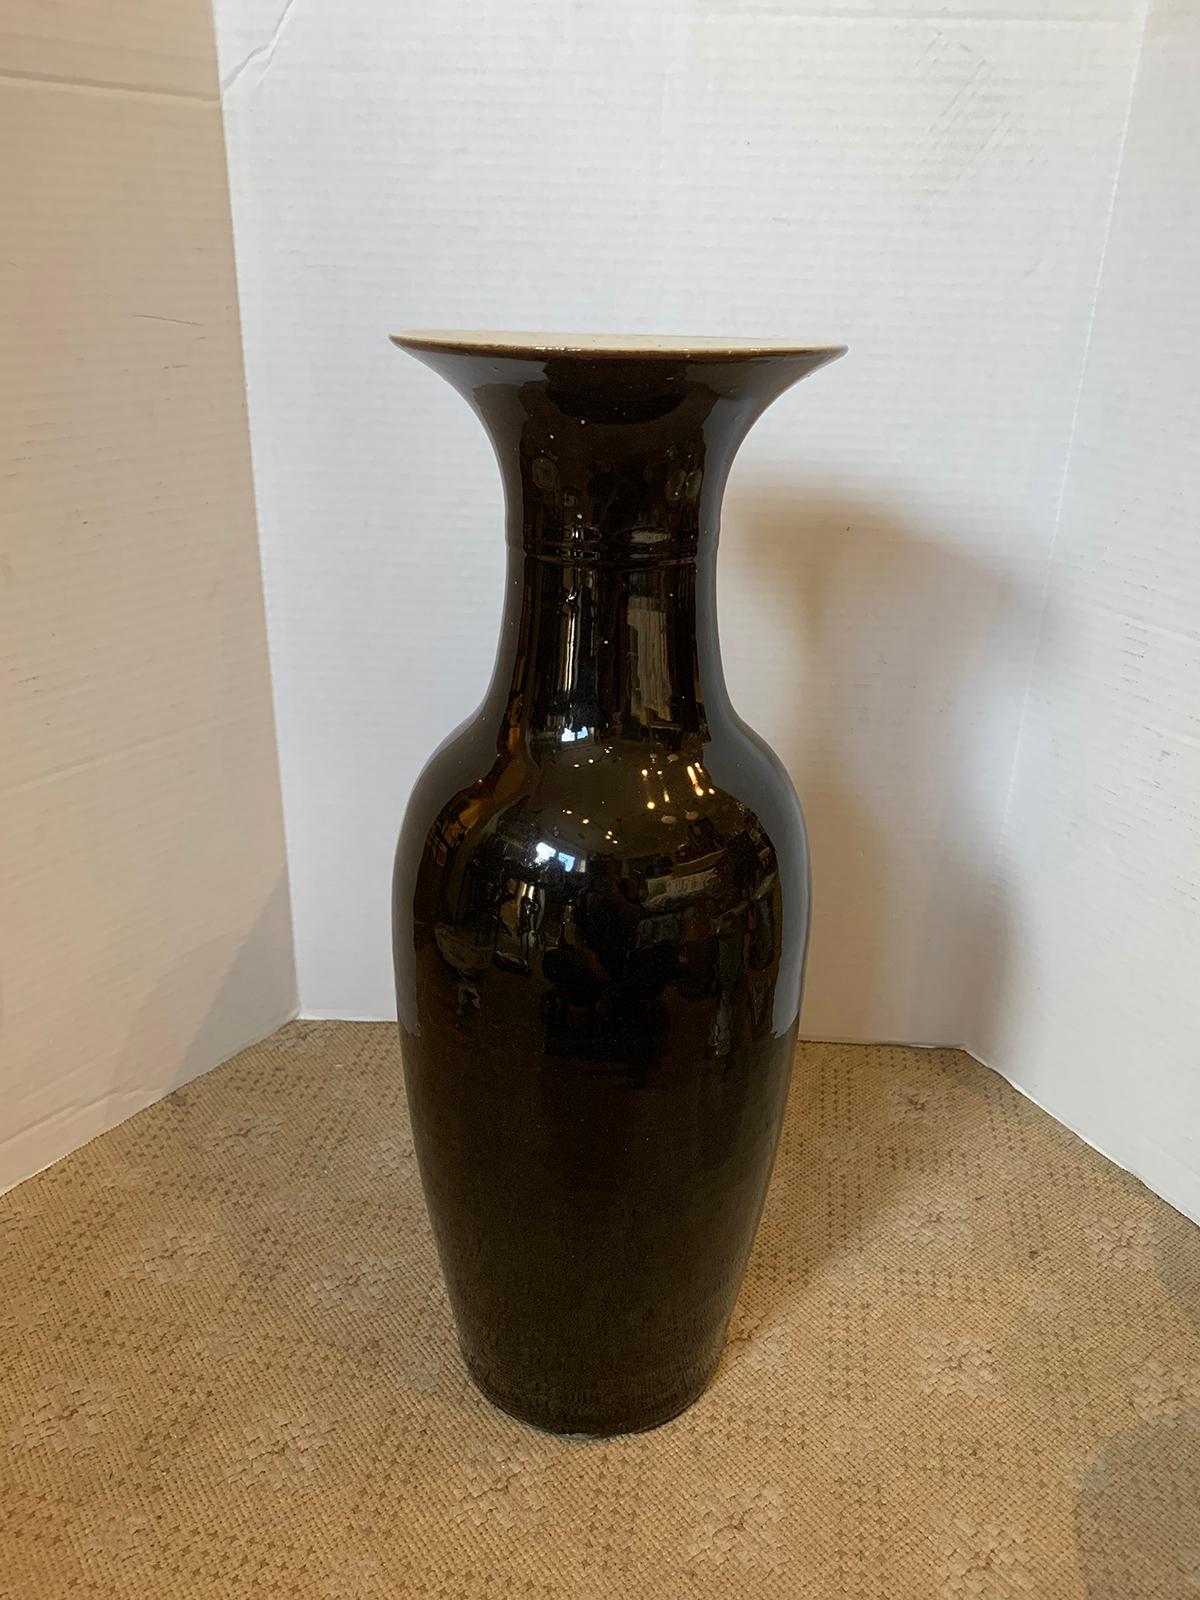 19th century Chinese mirror black porcelain vase, unmarked.